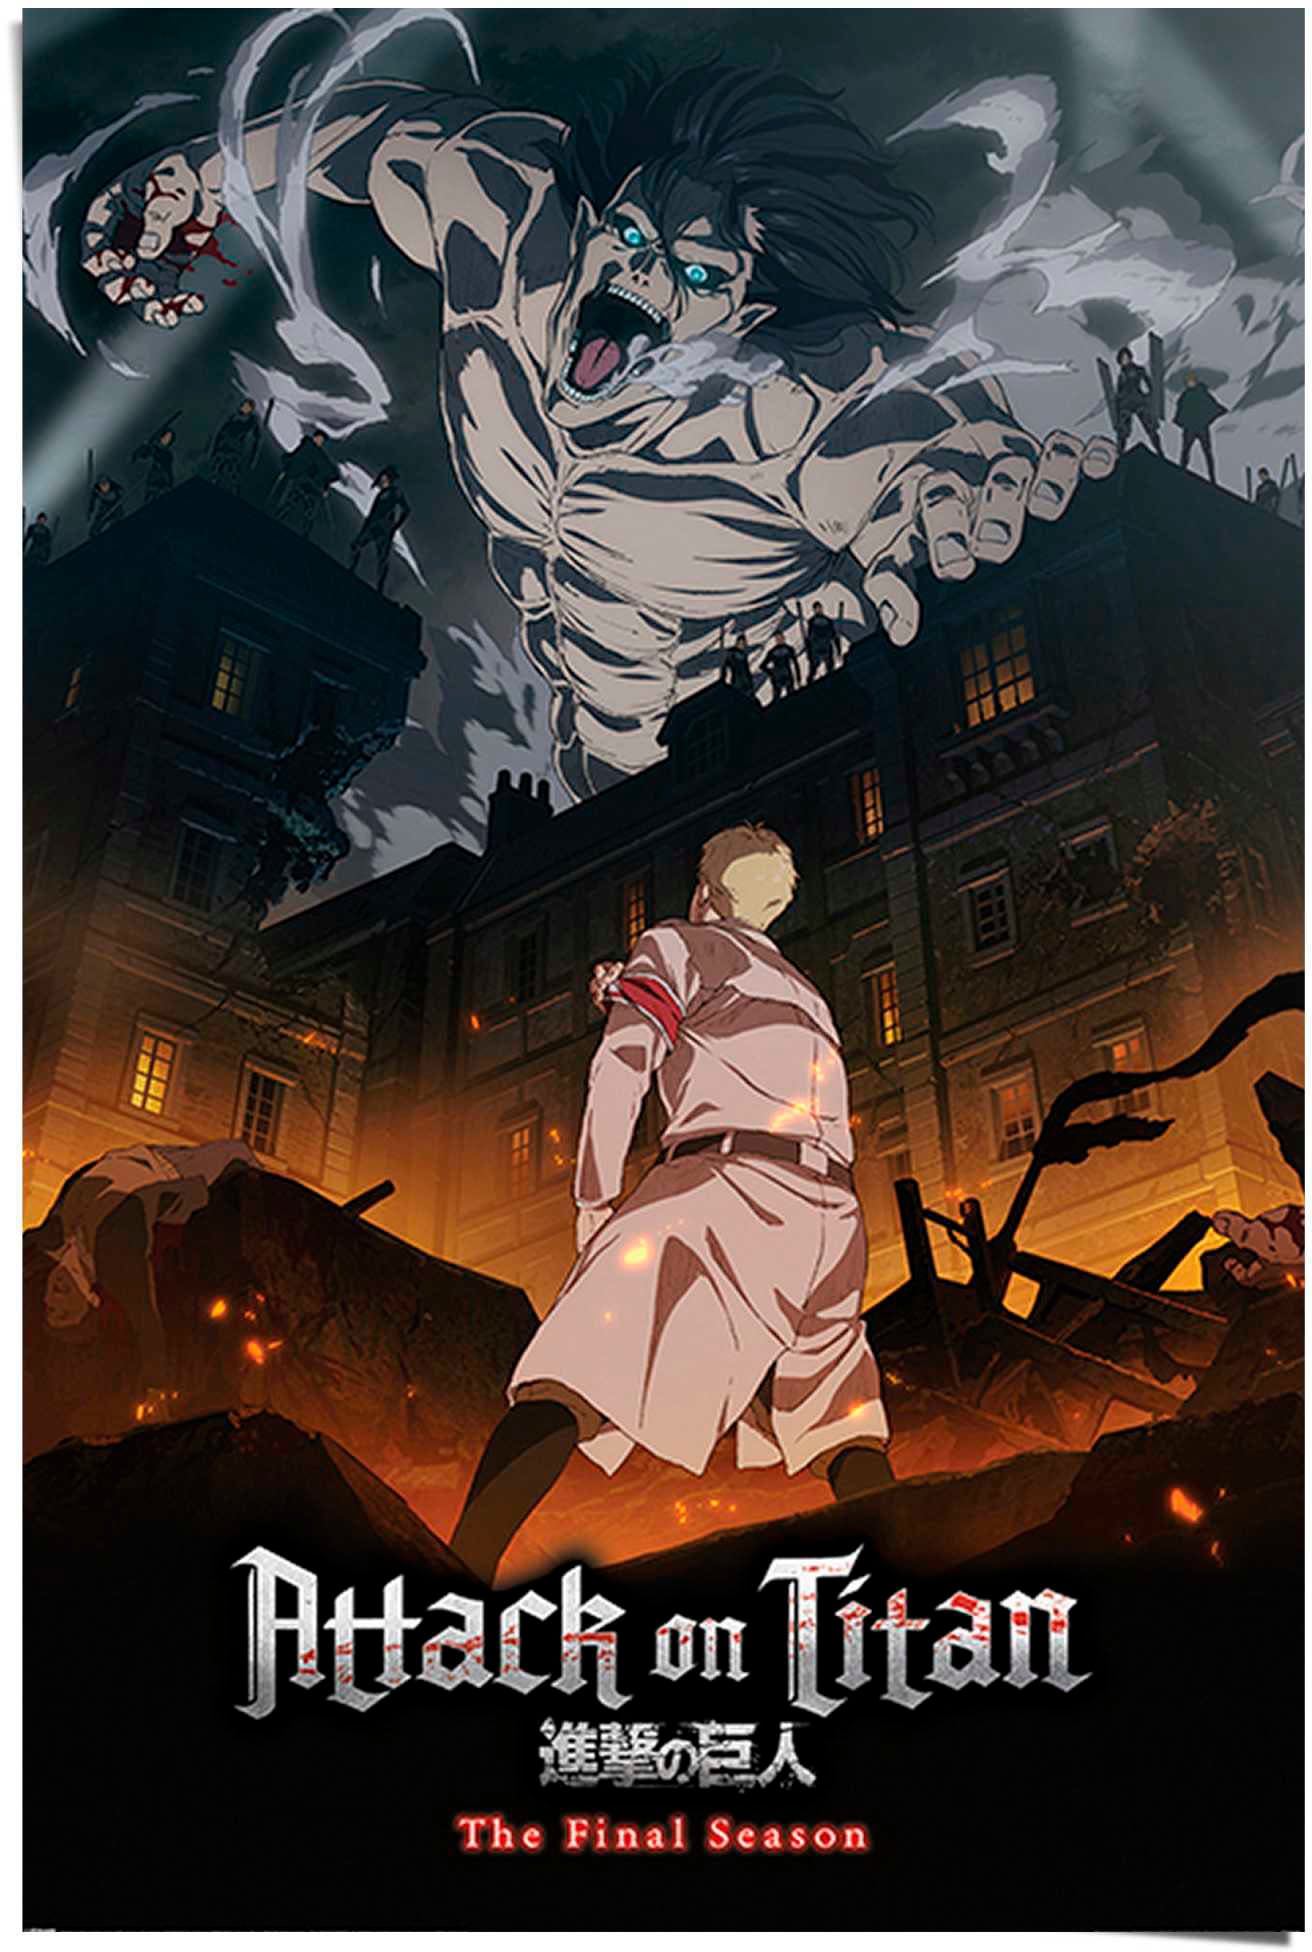 Poster »Attack on Titan S4 - eren onslaught«